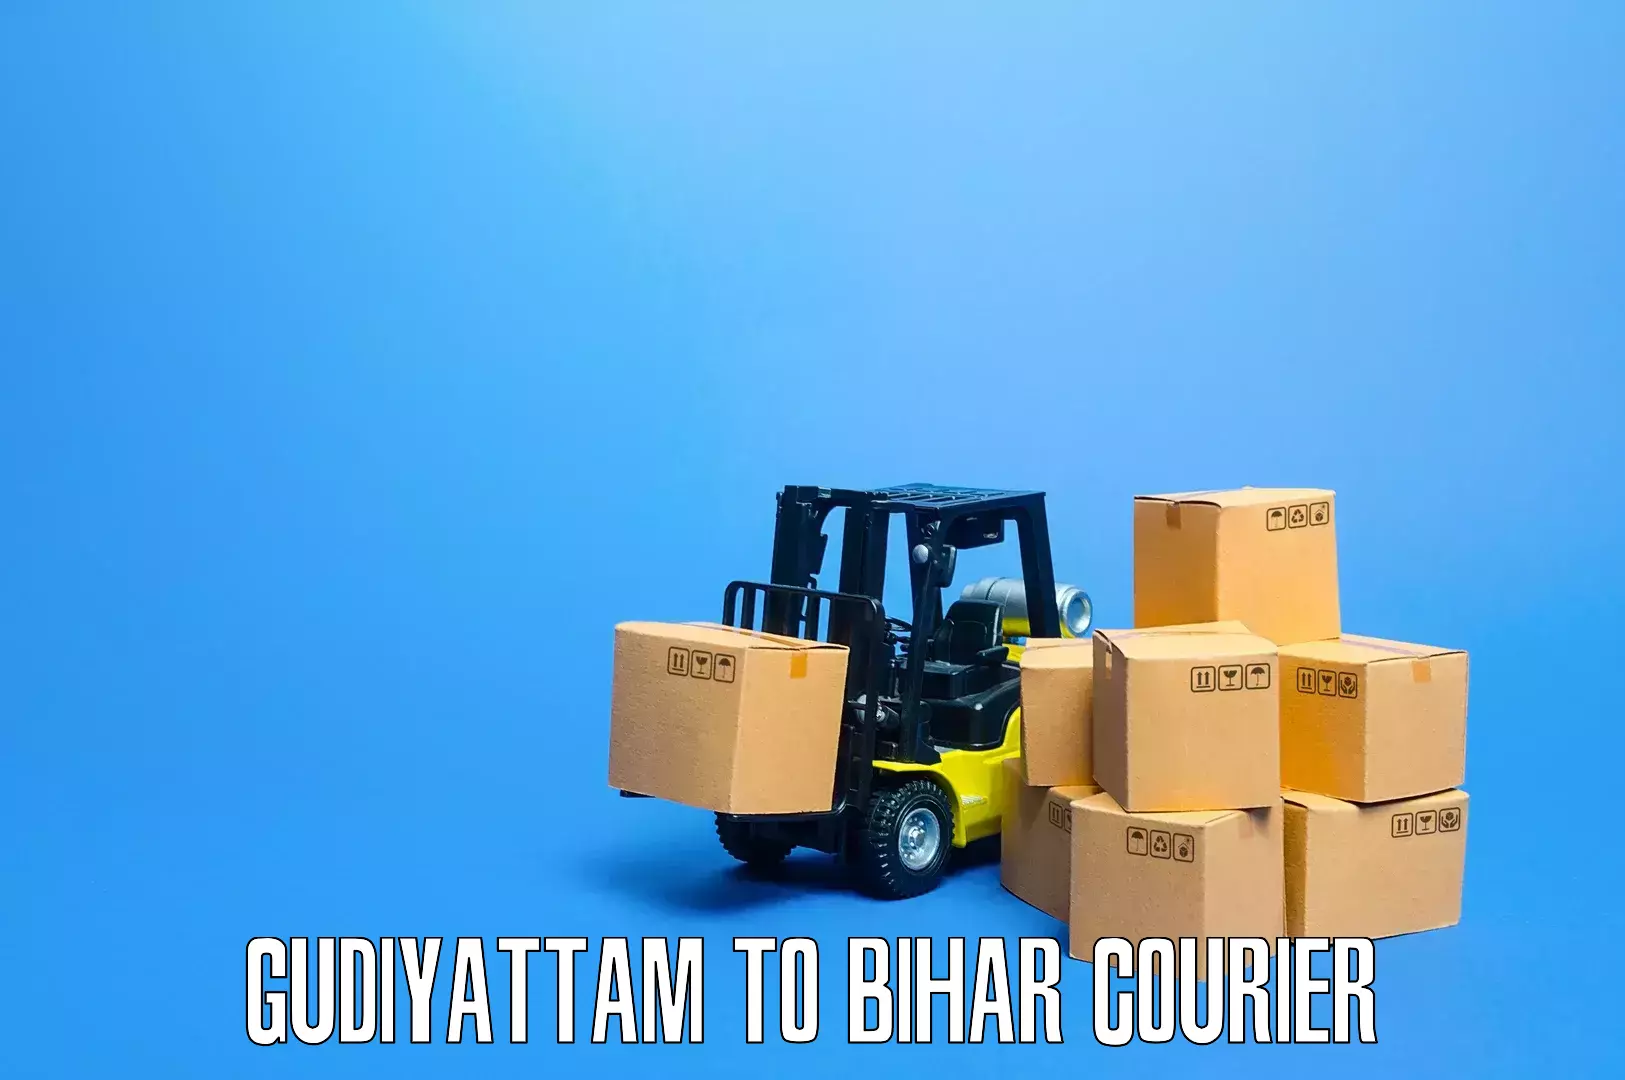 Furniture transport company Gudiyattam to Bihar